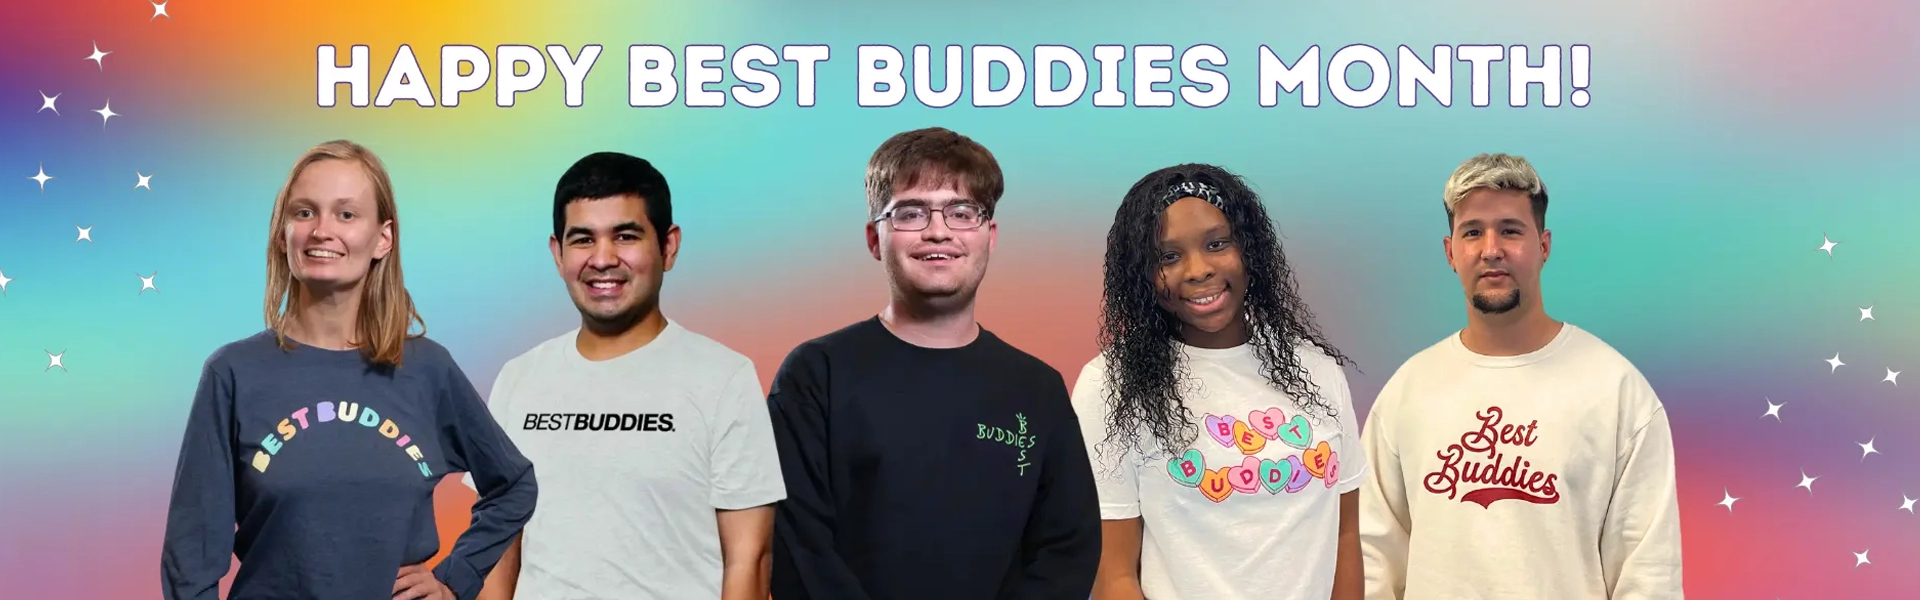 Happy Best Buddies Month Home Page Banner